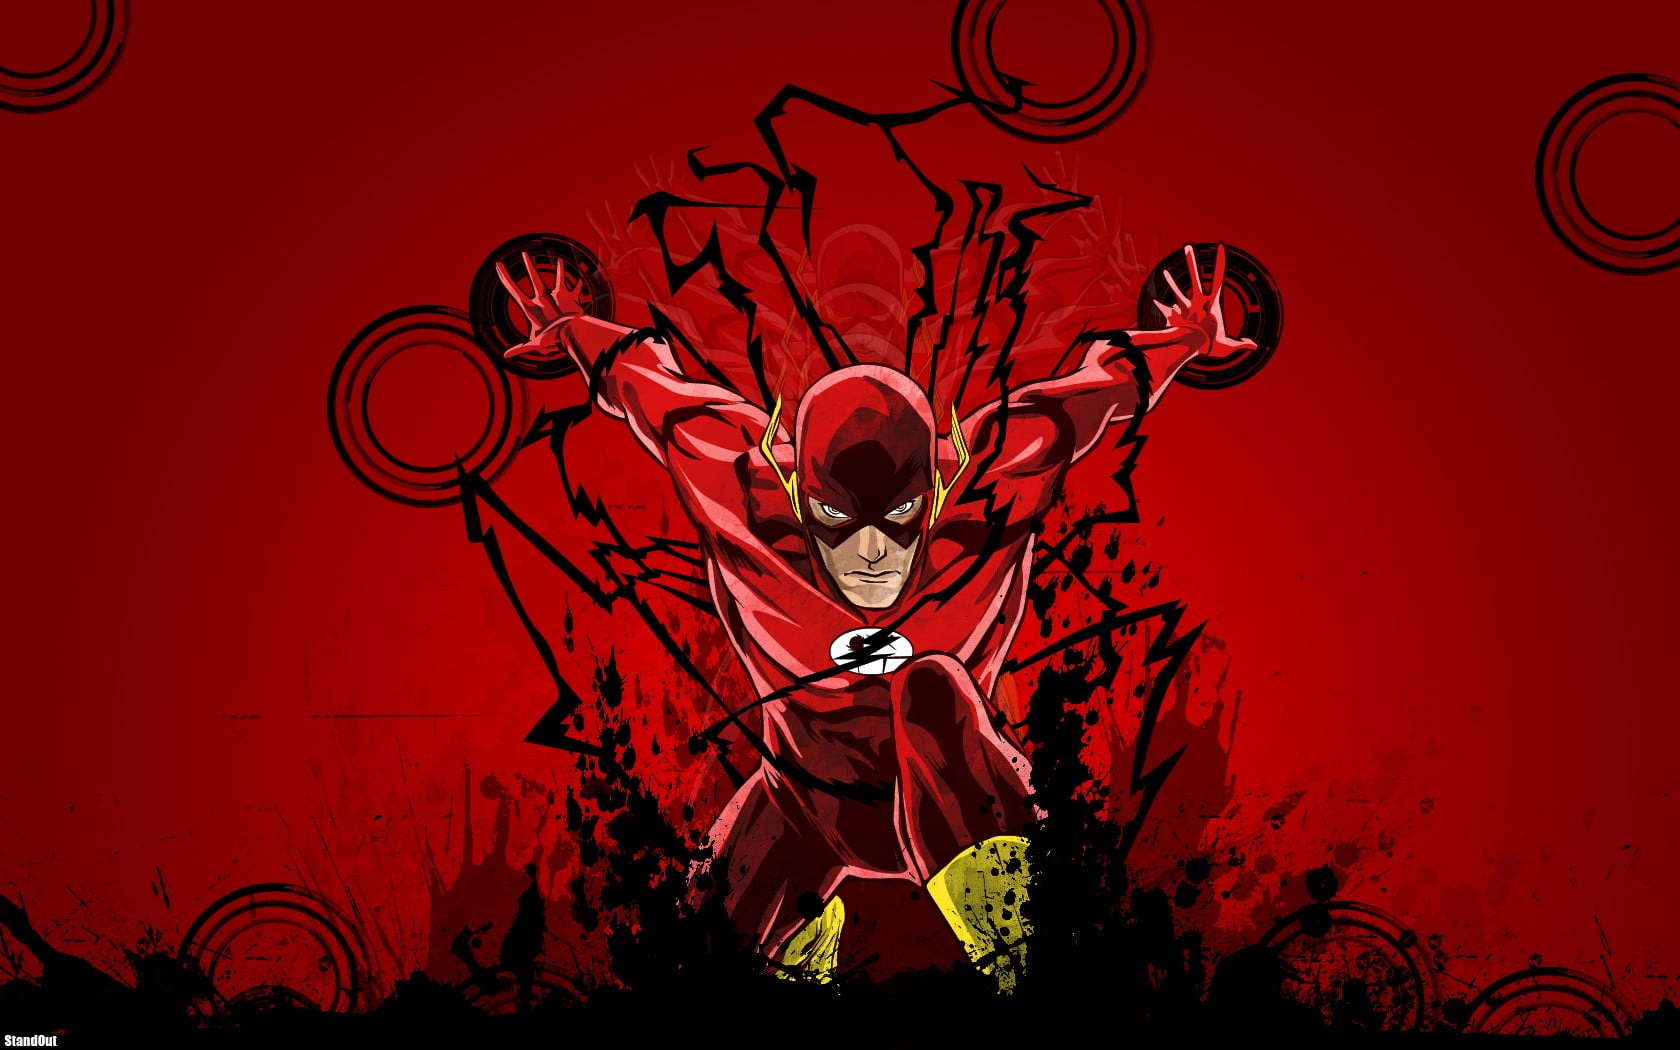 DC Flash illustration, The Flash, DC Comics, Justice League, red